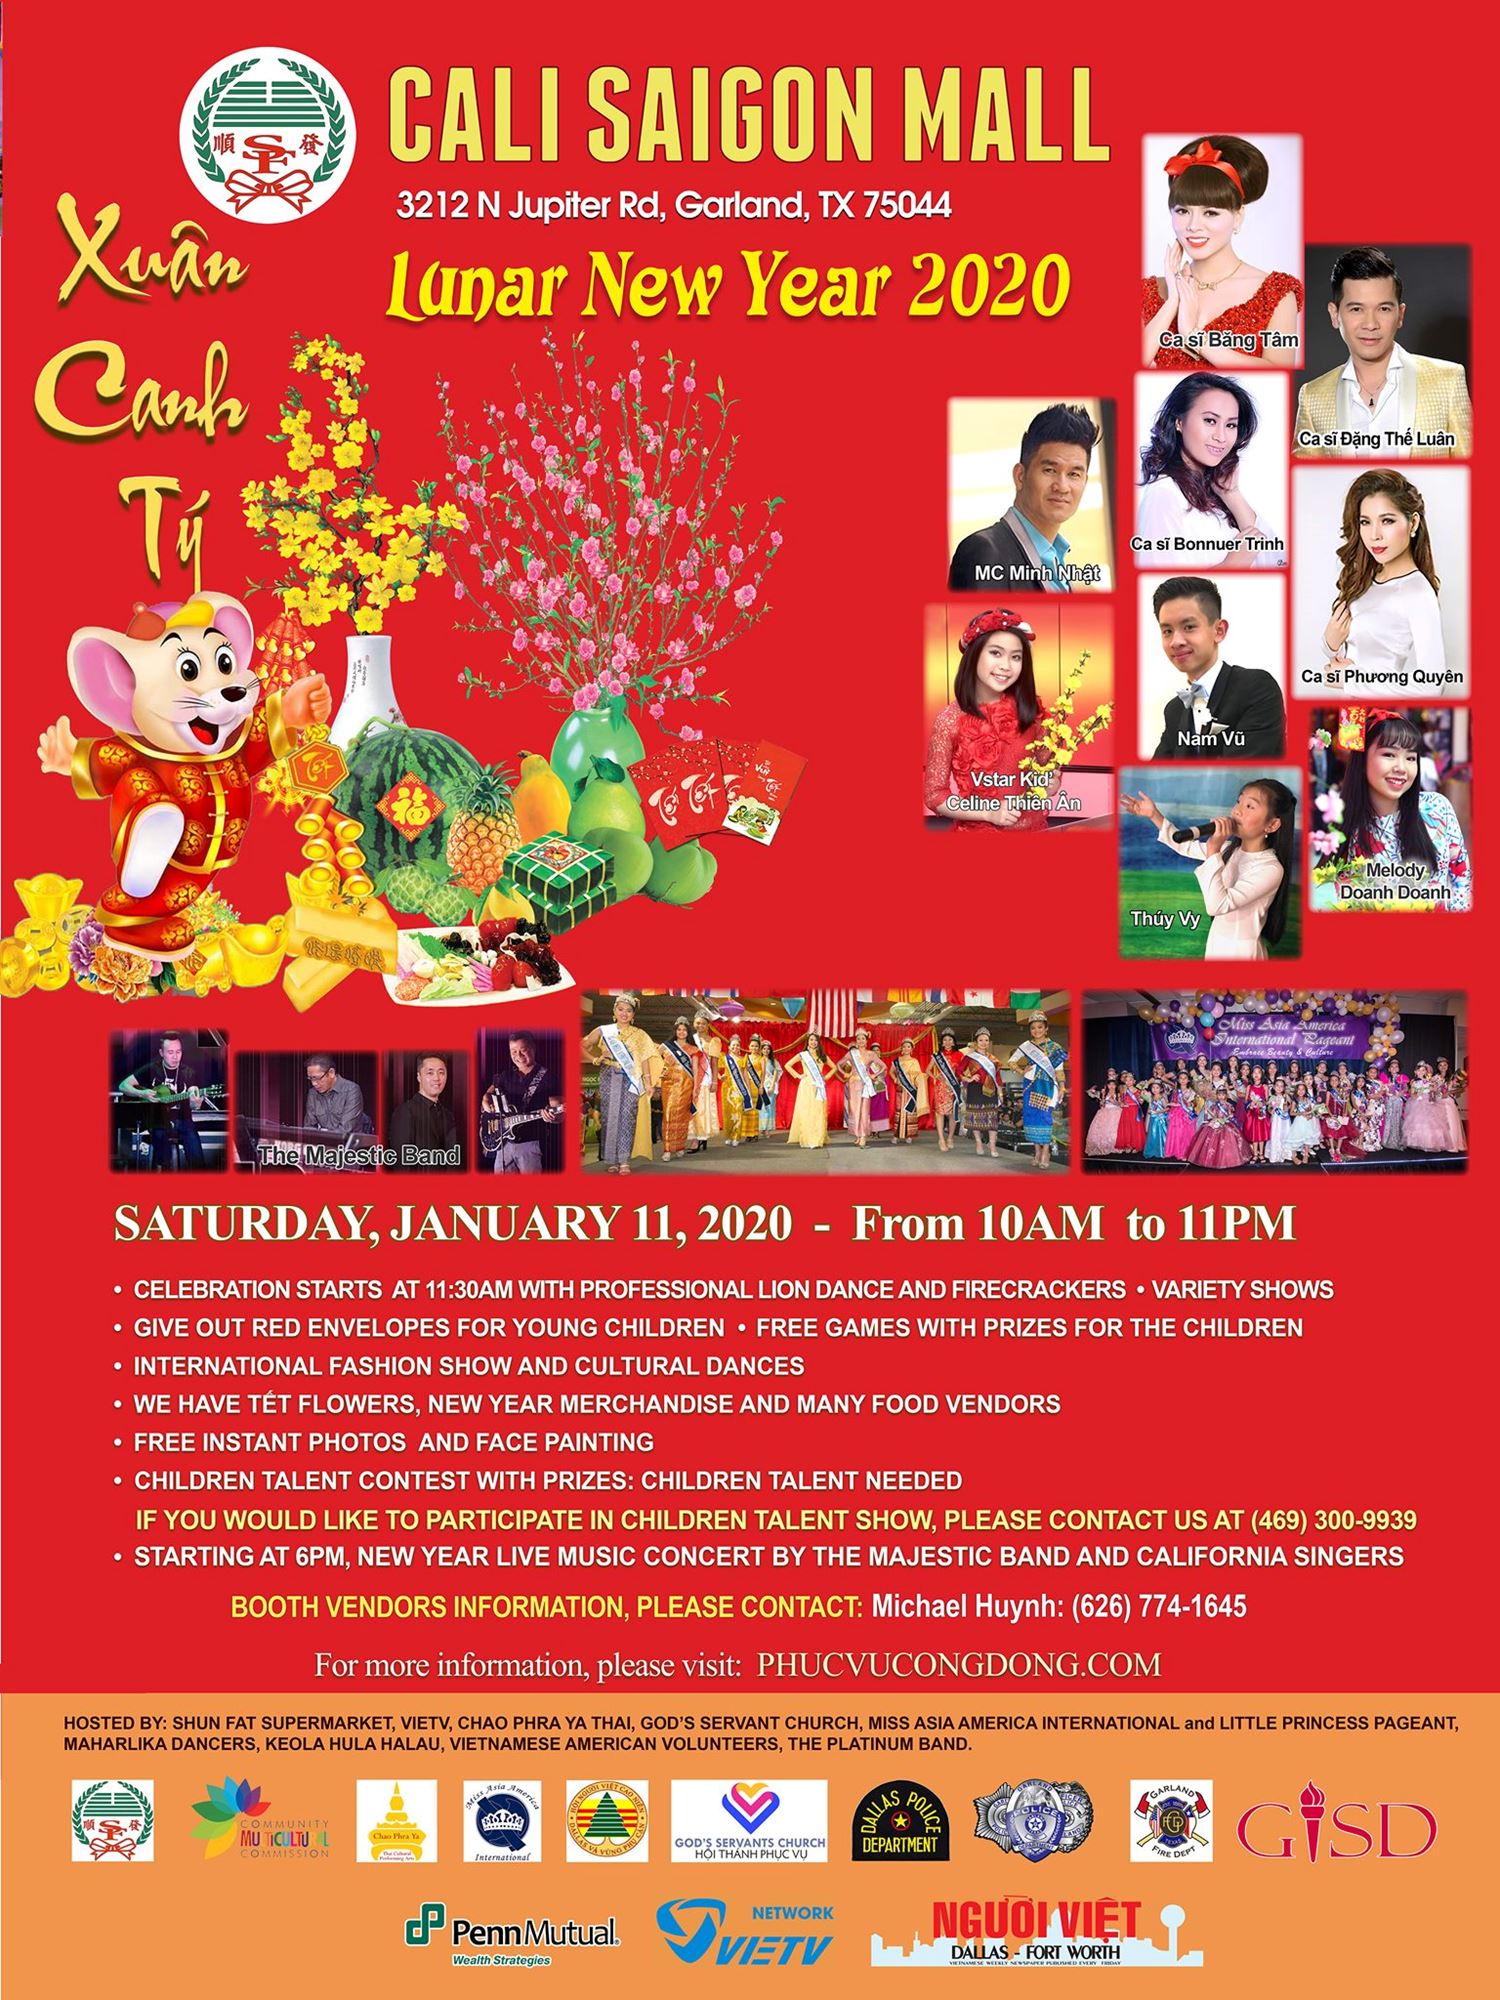 Cali-Saigon Mall’s Lunar New Year 2020